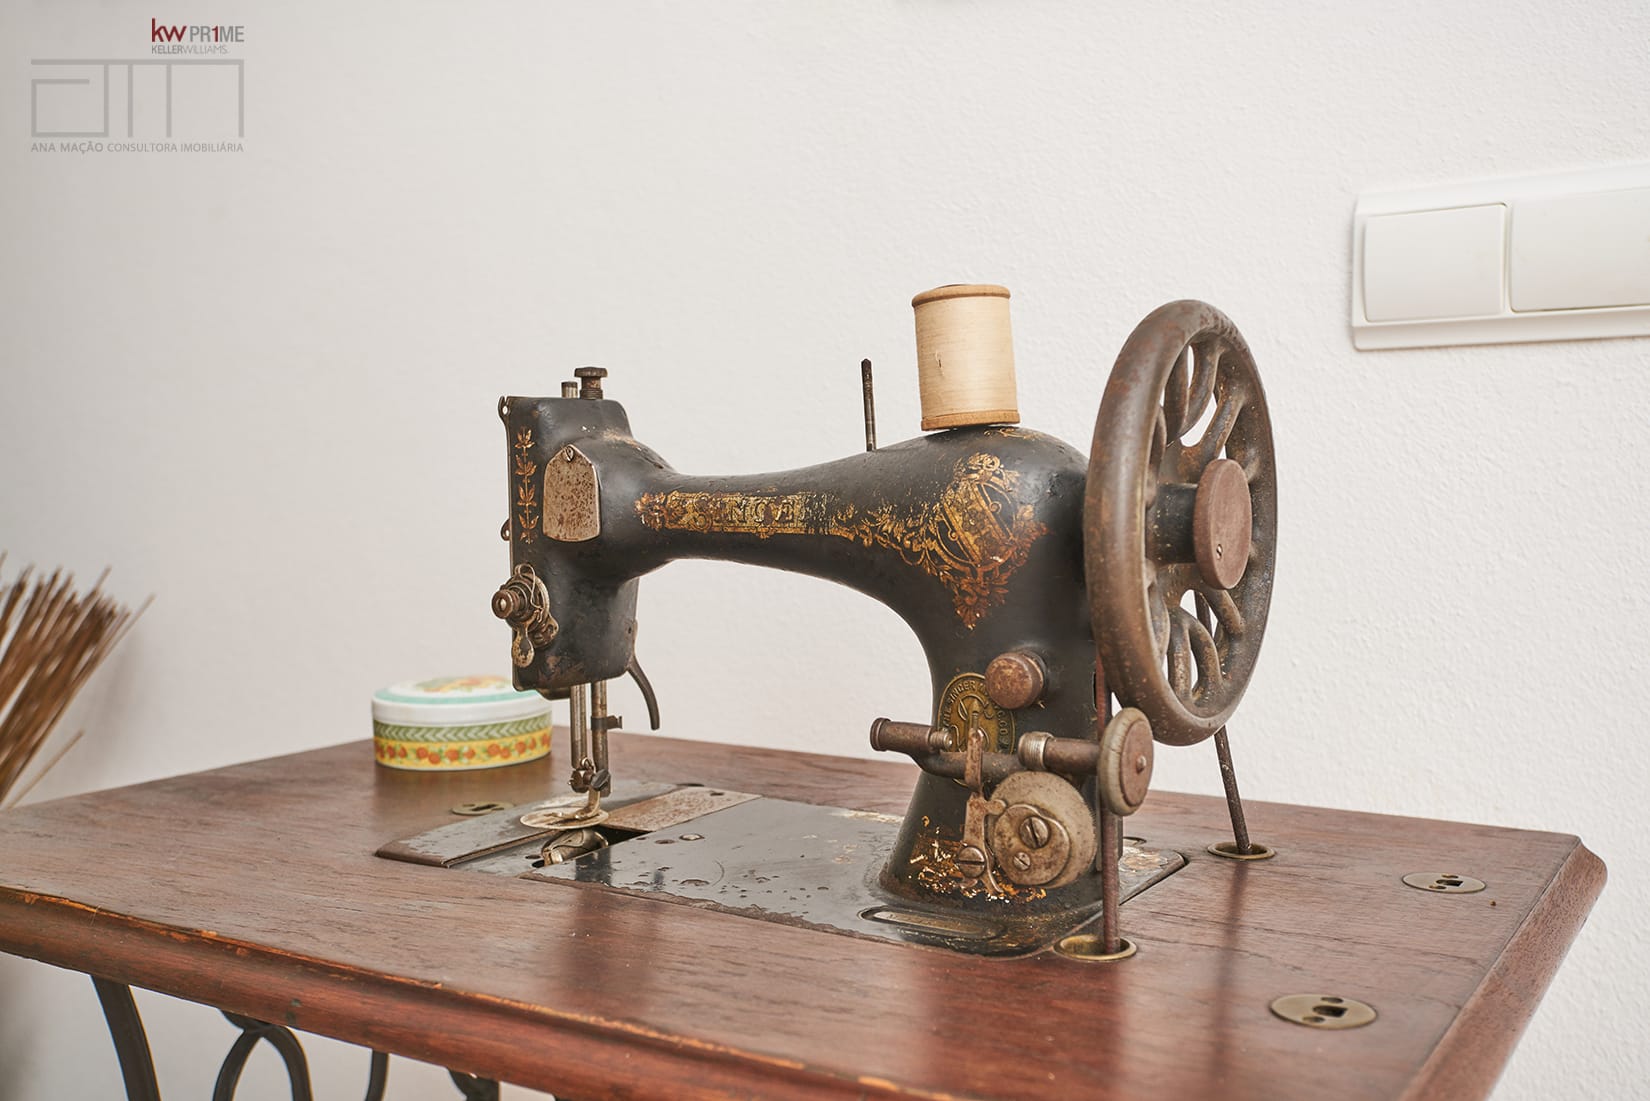 Máquina de costura tradiional